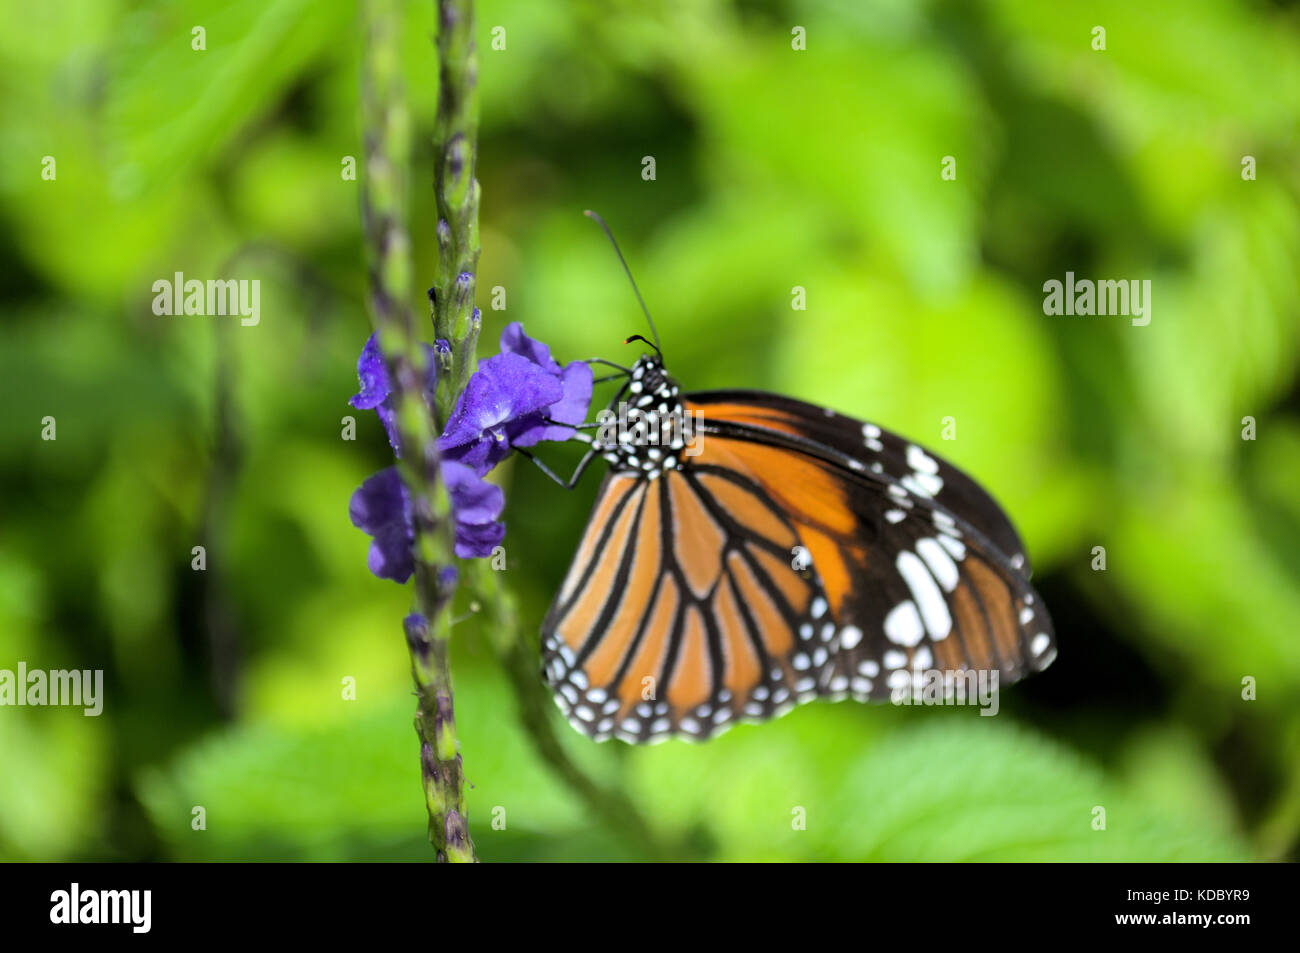 A little beautiful butterfly perching on a flower. Stock Photo